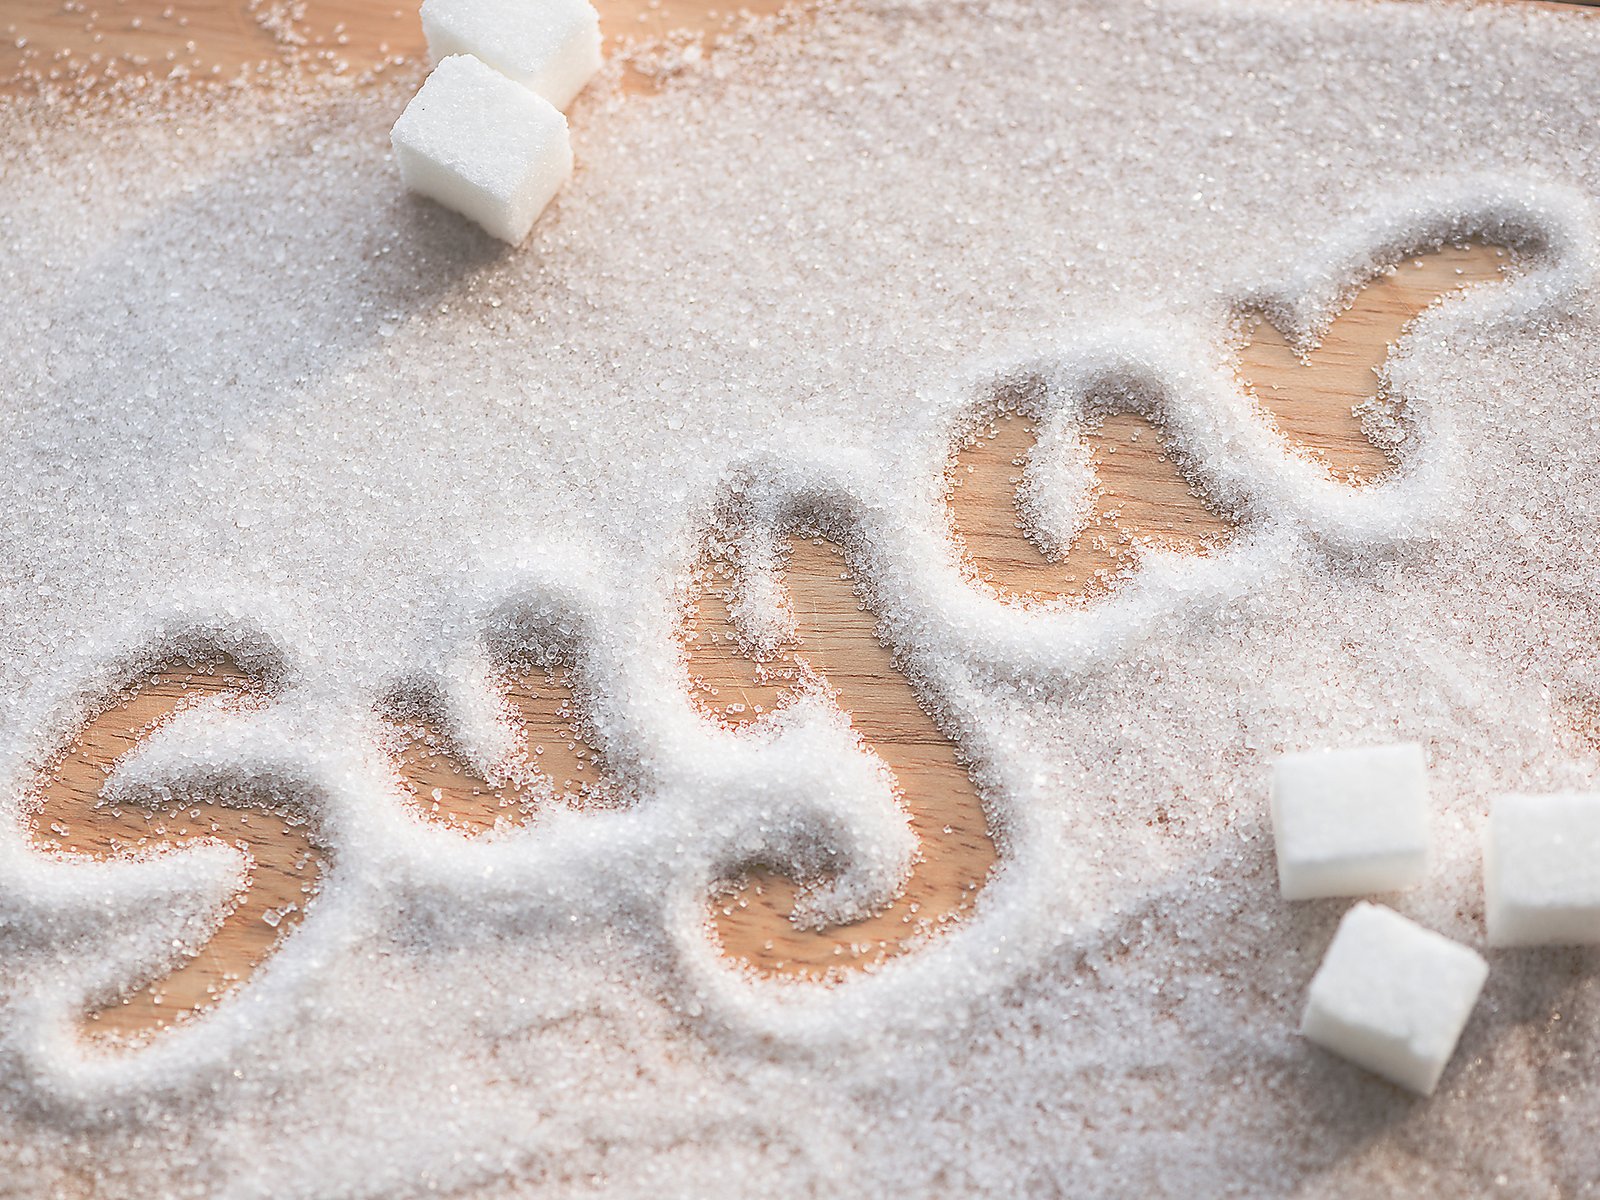 Govt reduces export duty on sugar